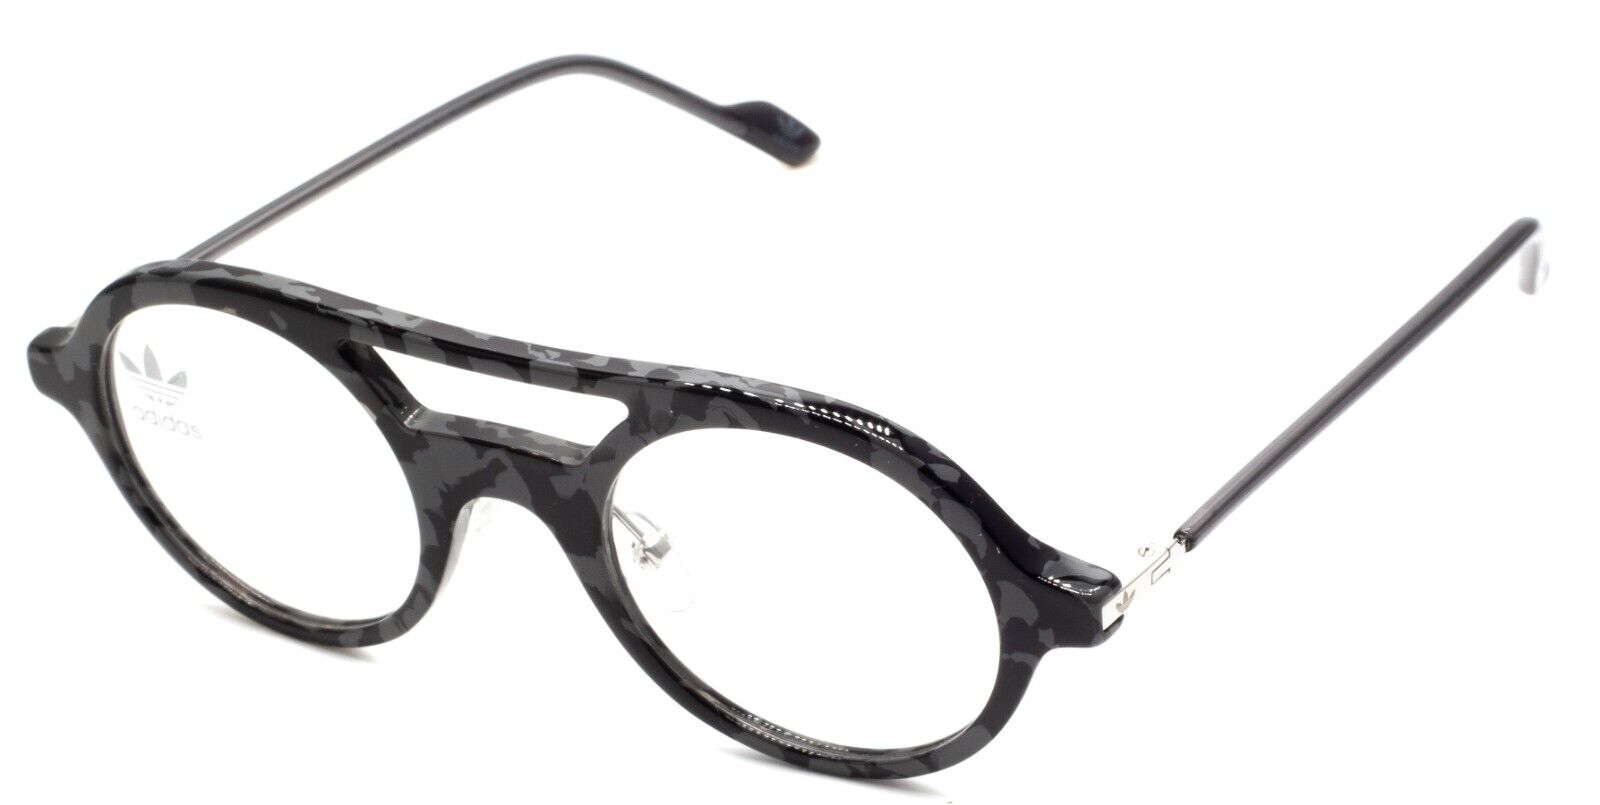 ADIDAS by ITALIA INDEPENDENT AOK004O.096.000 48mm RX Optical Glasses Eyewear - GGV Eyewear